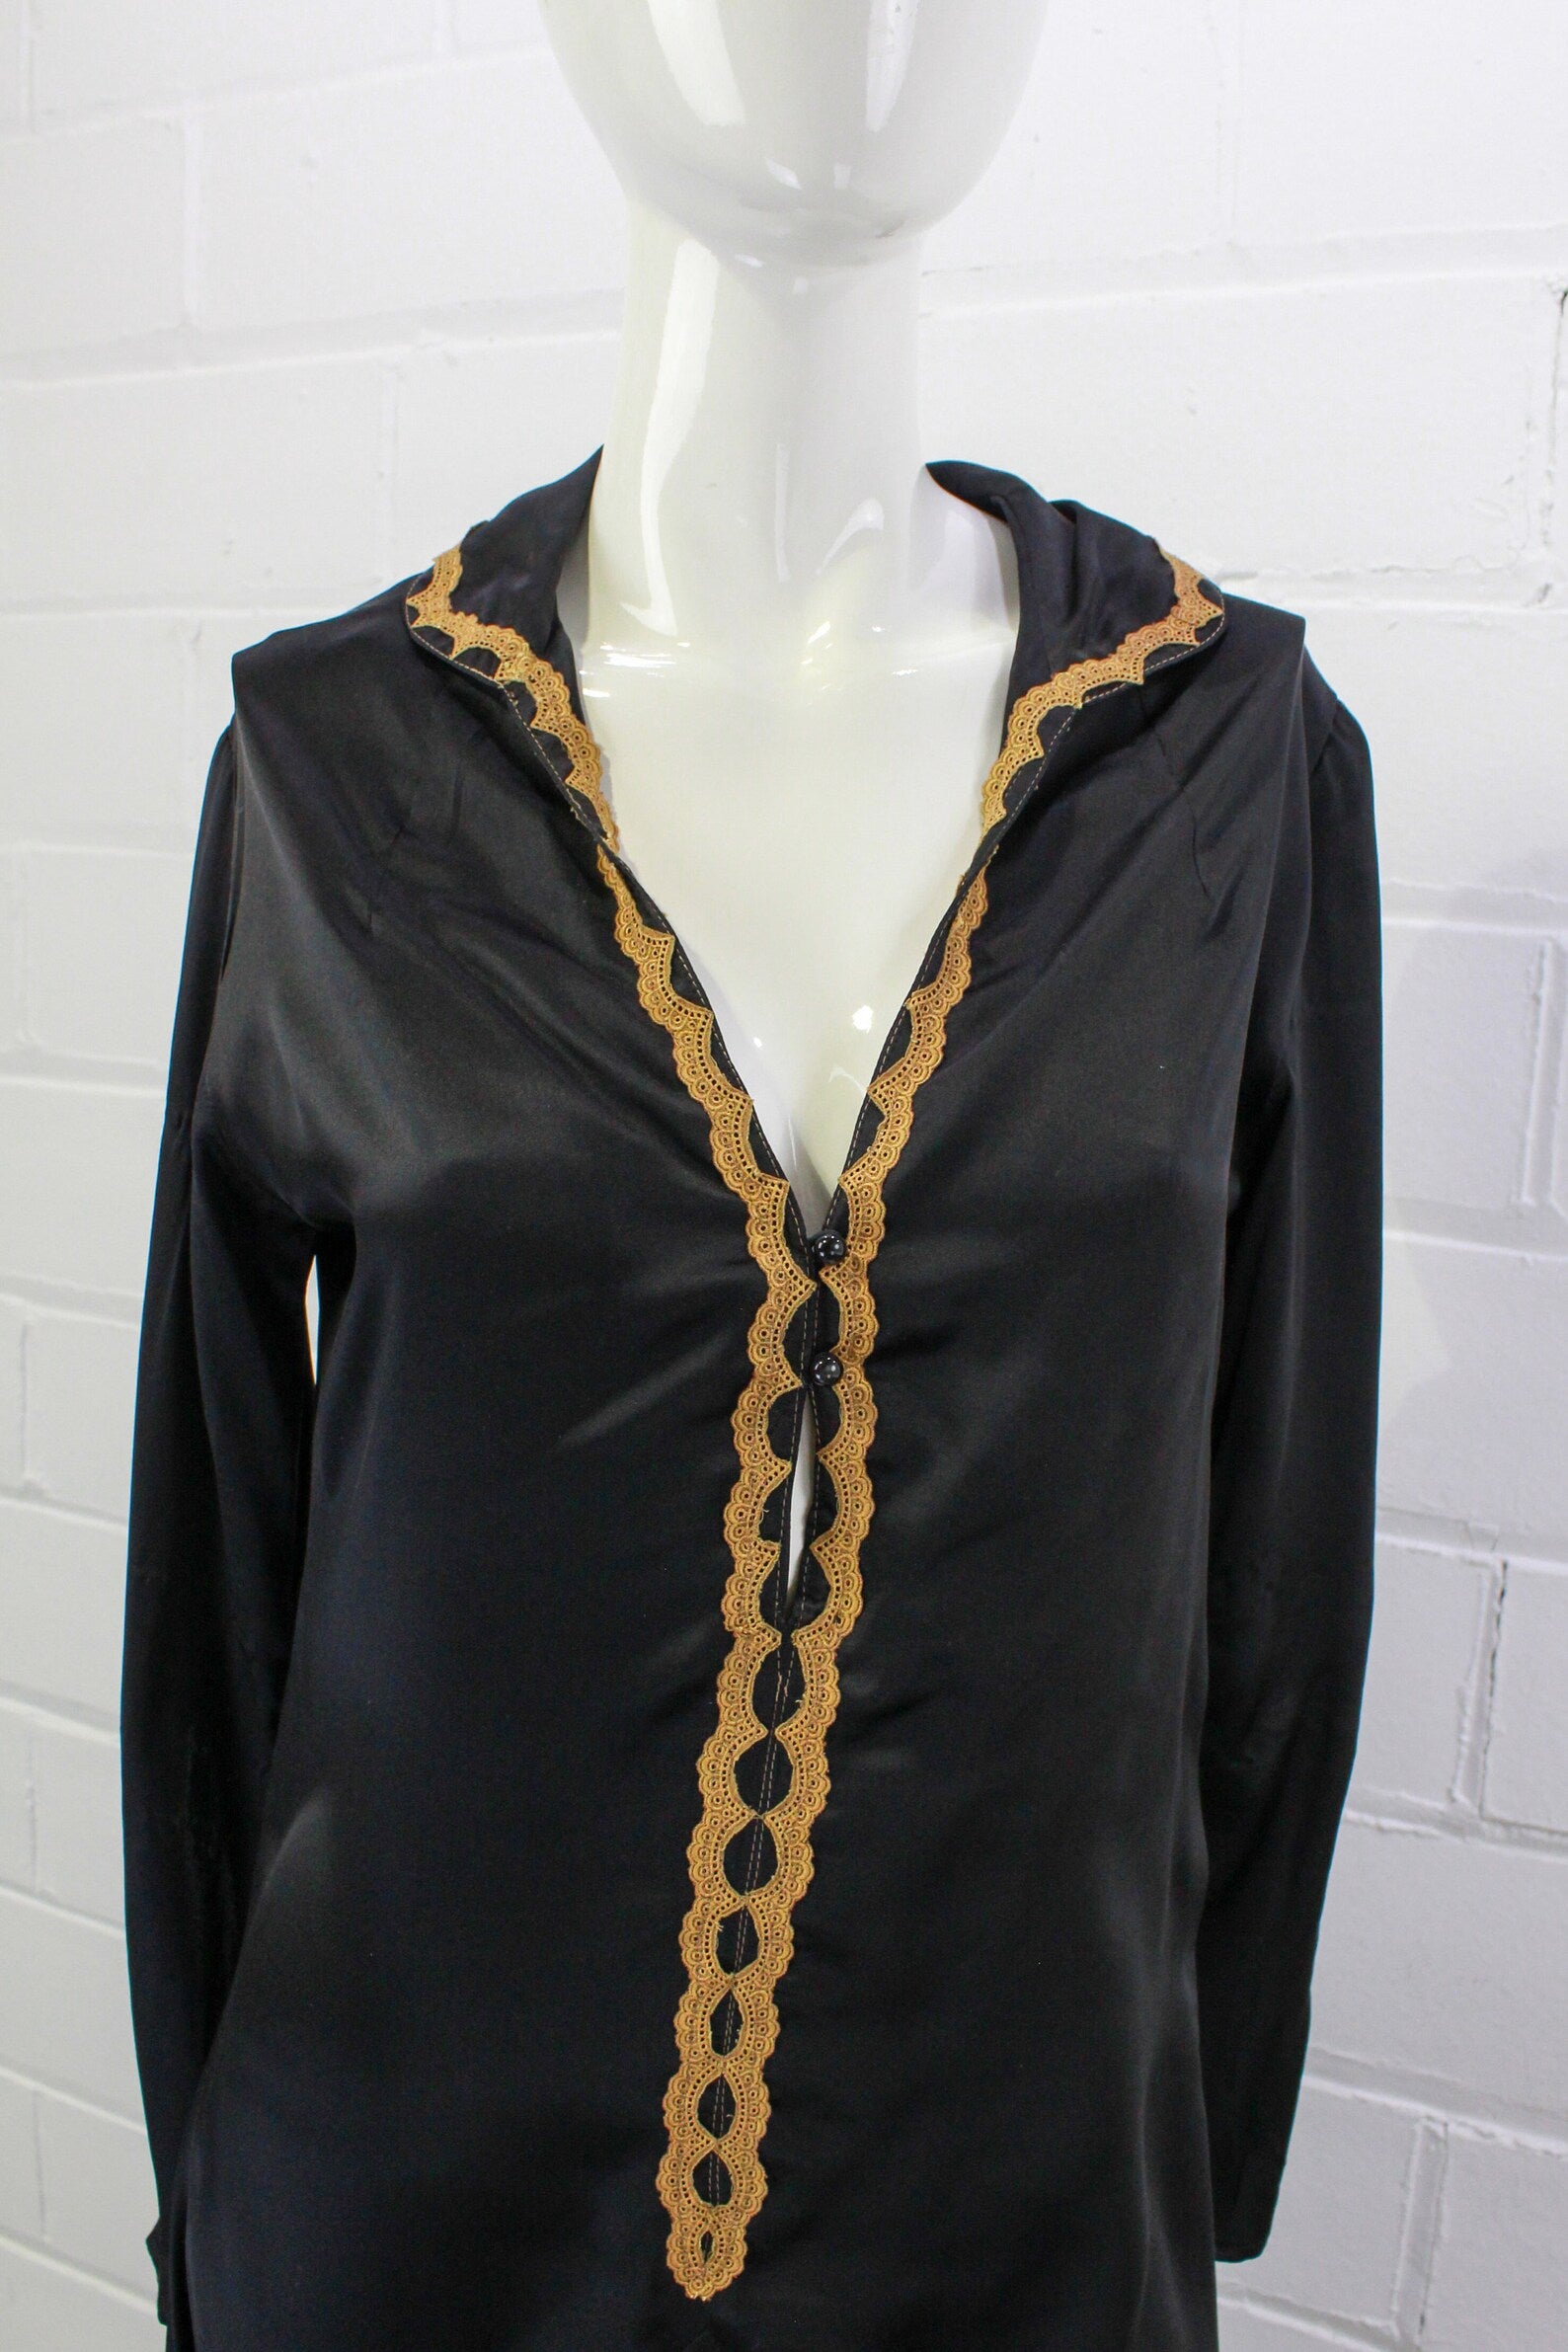 Reproduction 1930s style Black Liquid Satin Long Sleeve Tunic Dress, Small. Ian Drummond Vintage.